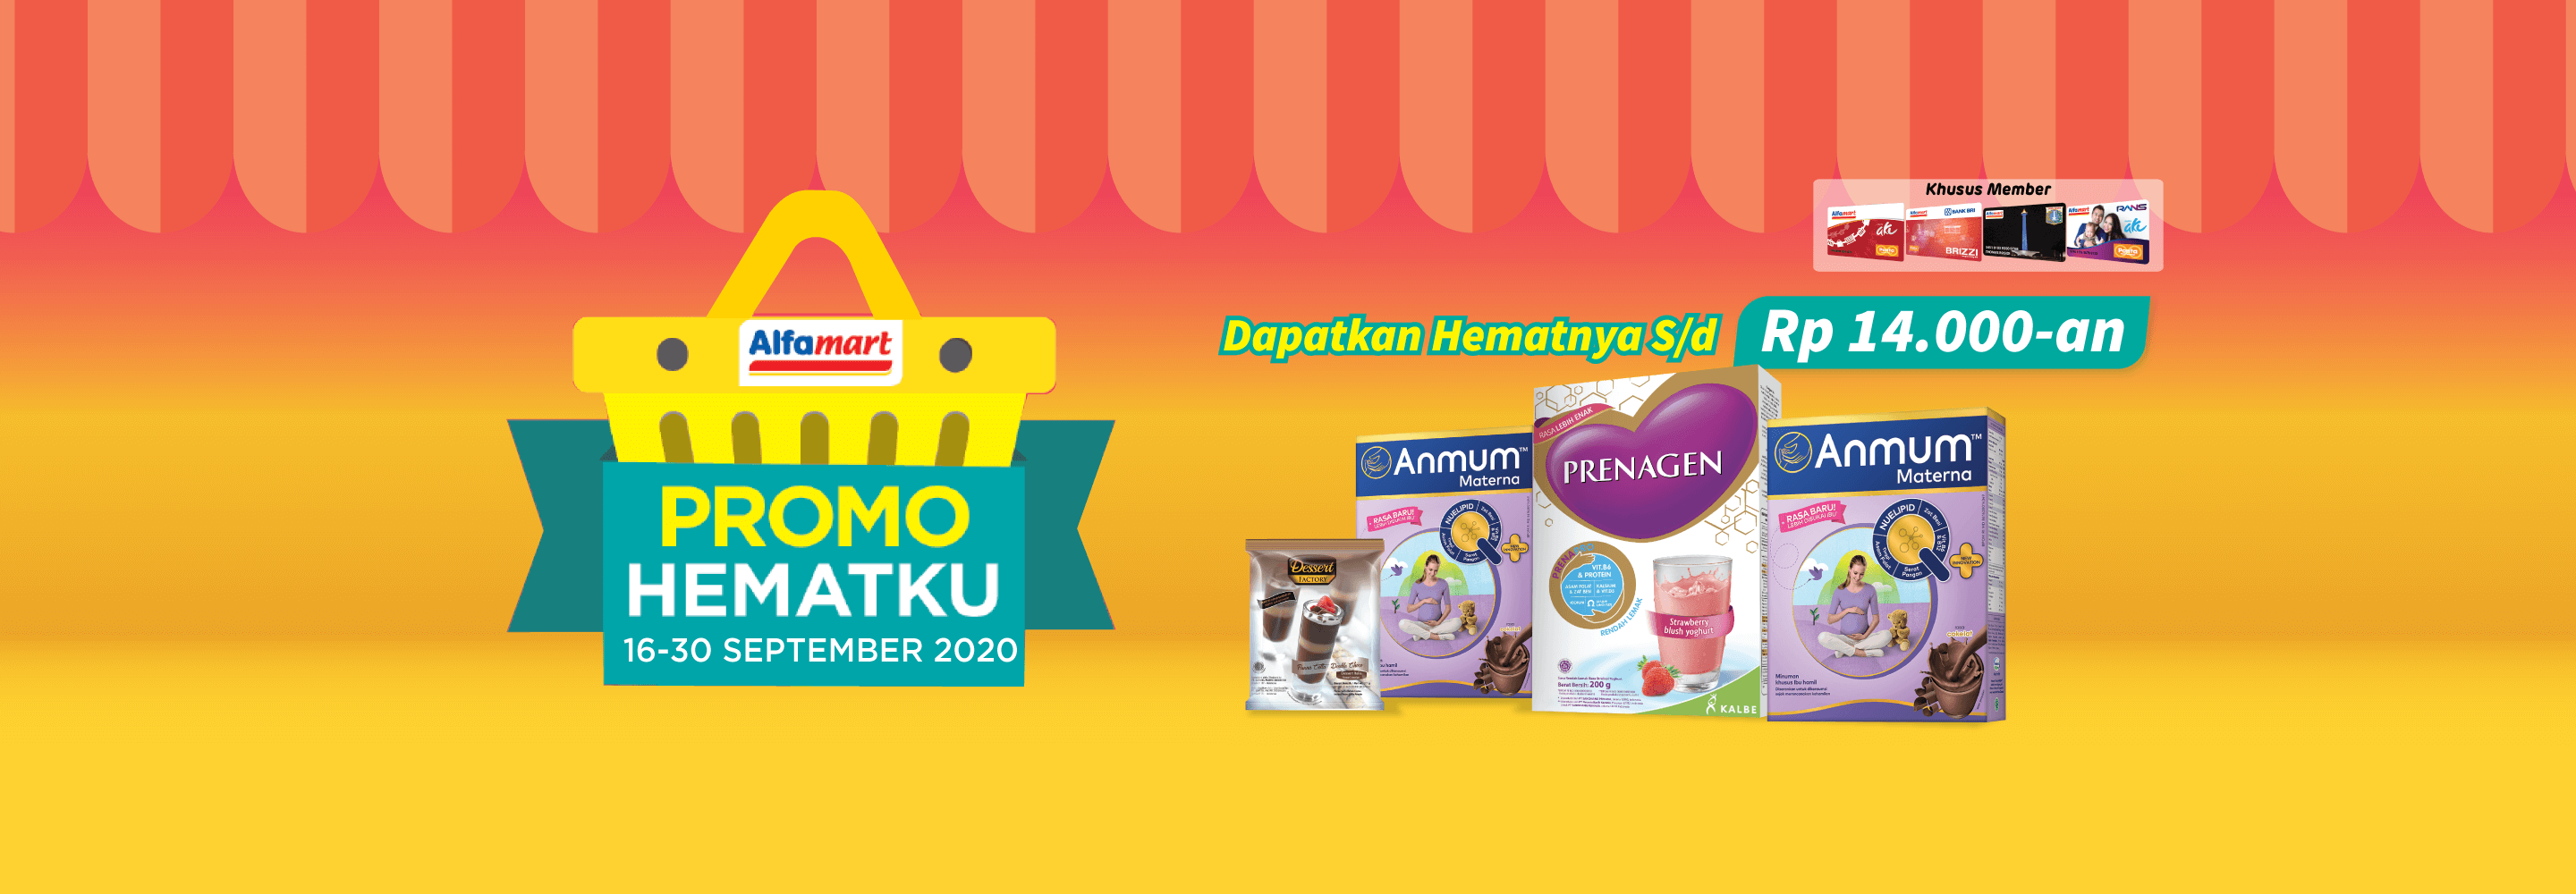 Promo Promo Hematku 16 - 30 September 2020 Alfamart